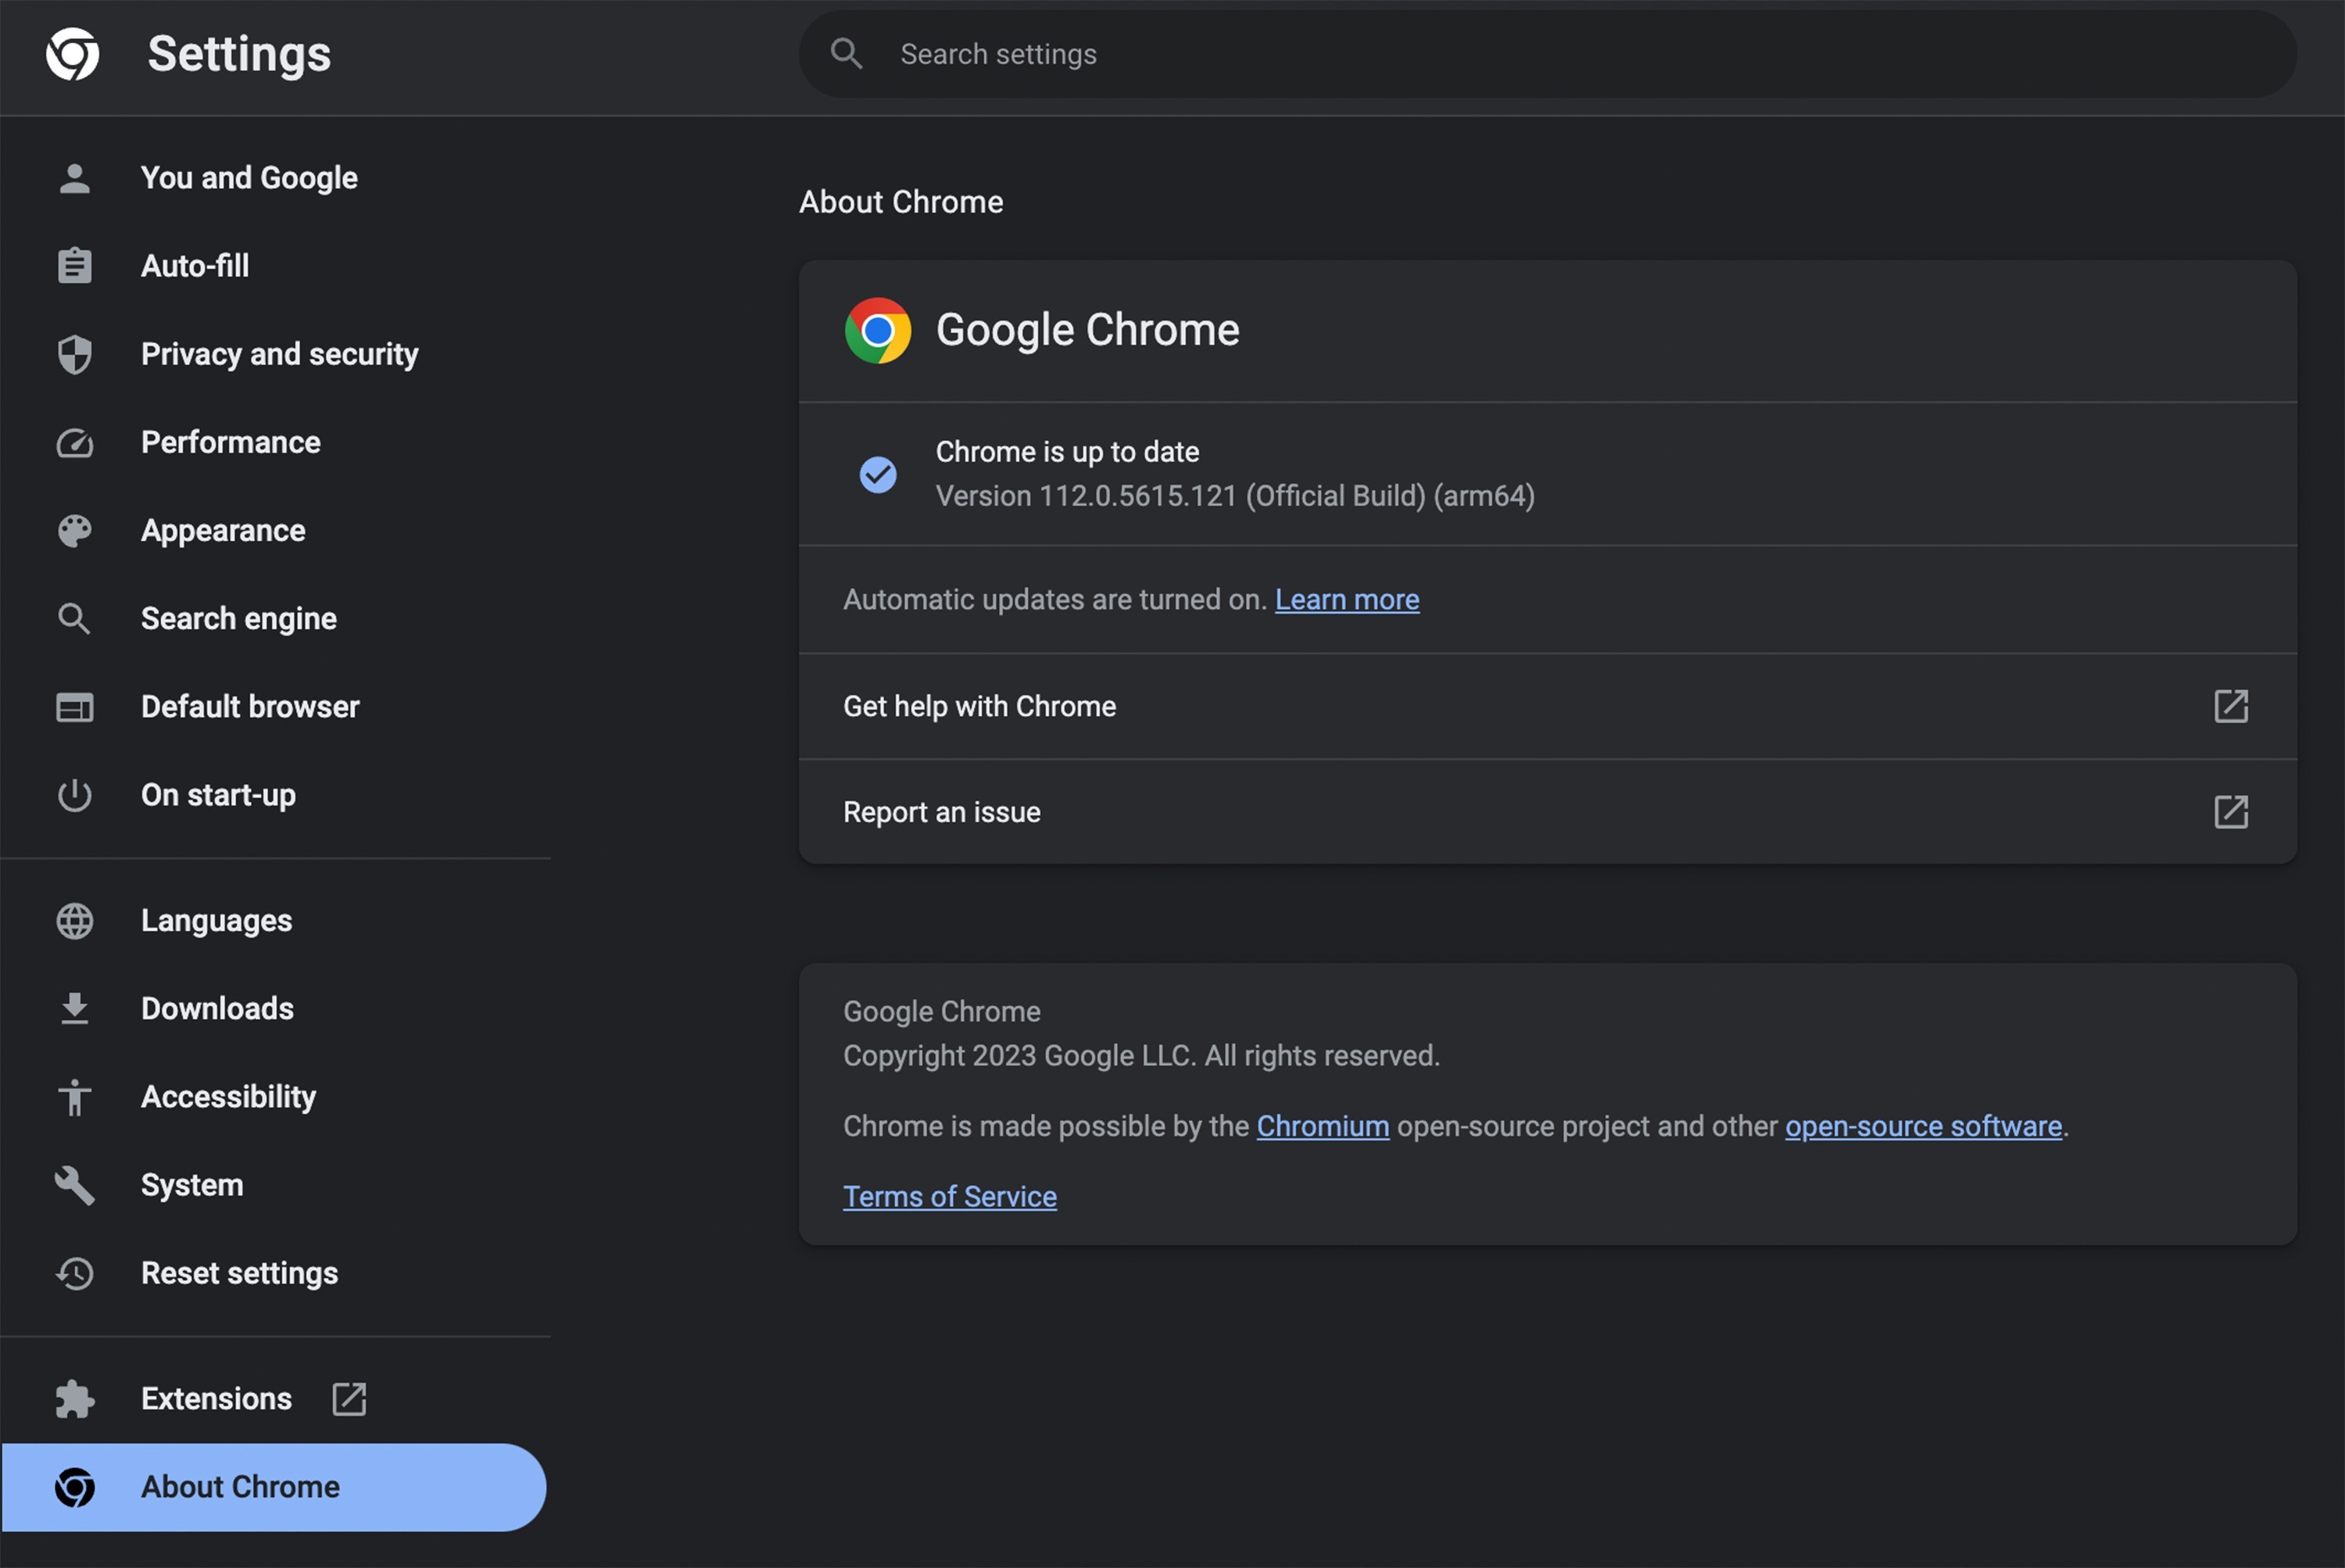 Update Google Chrome to version 112.0.5615.121